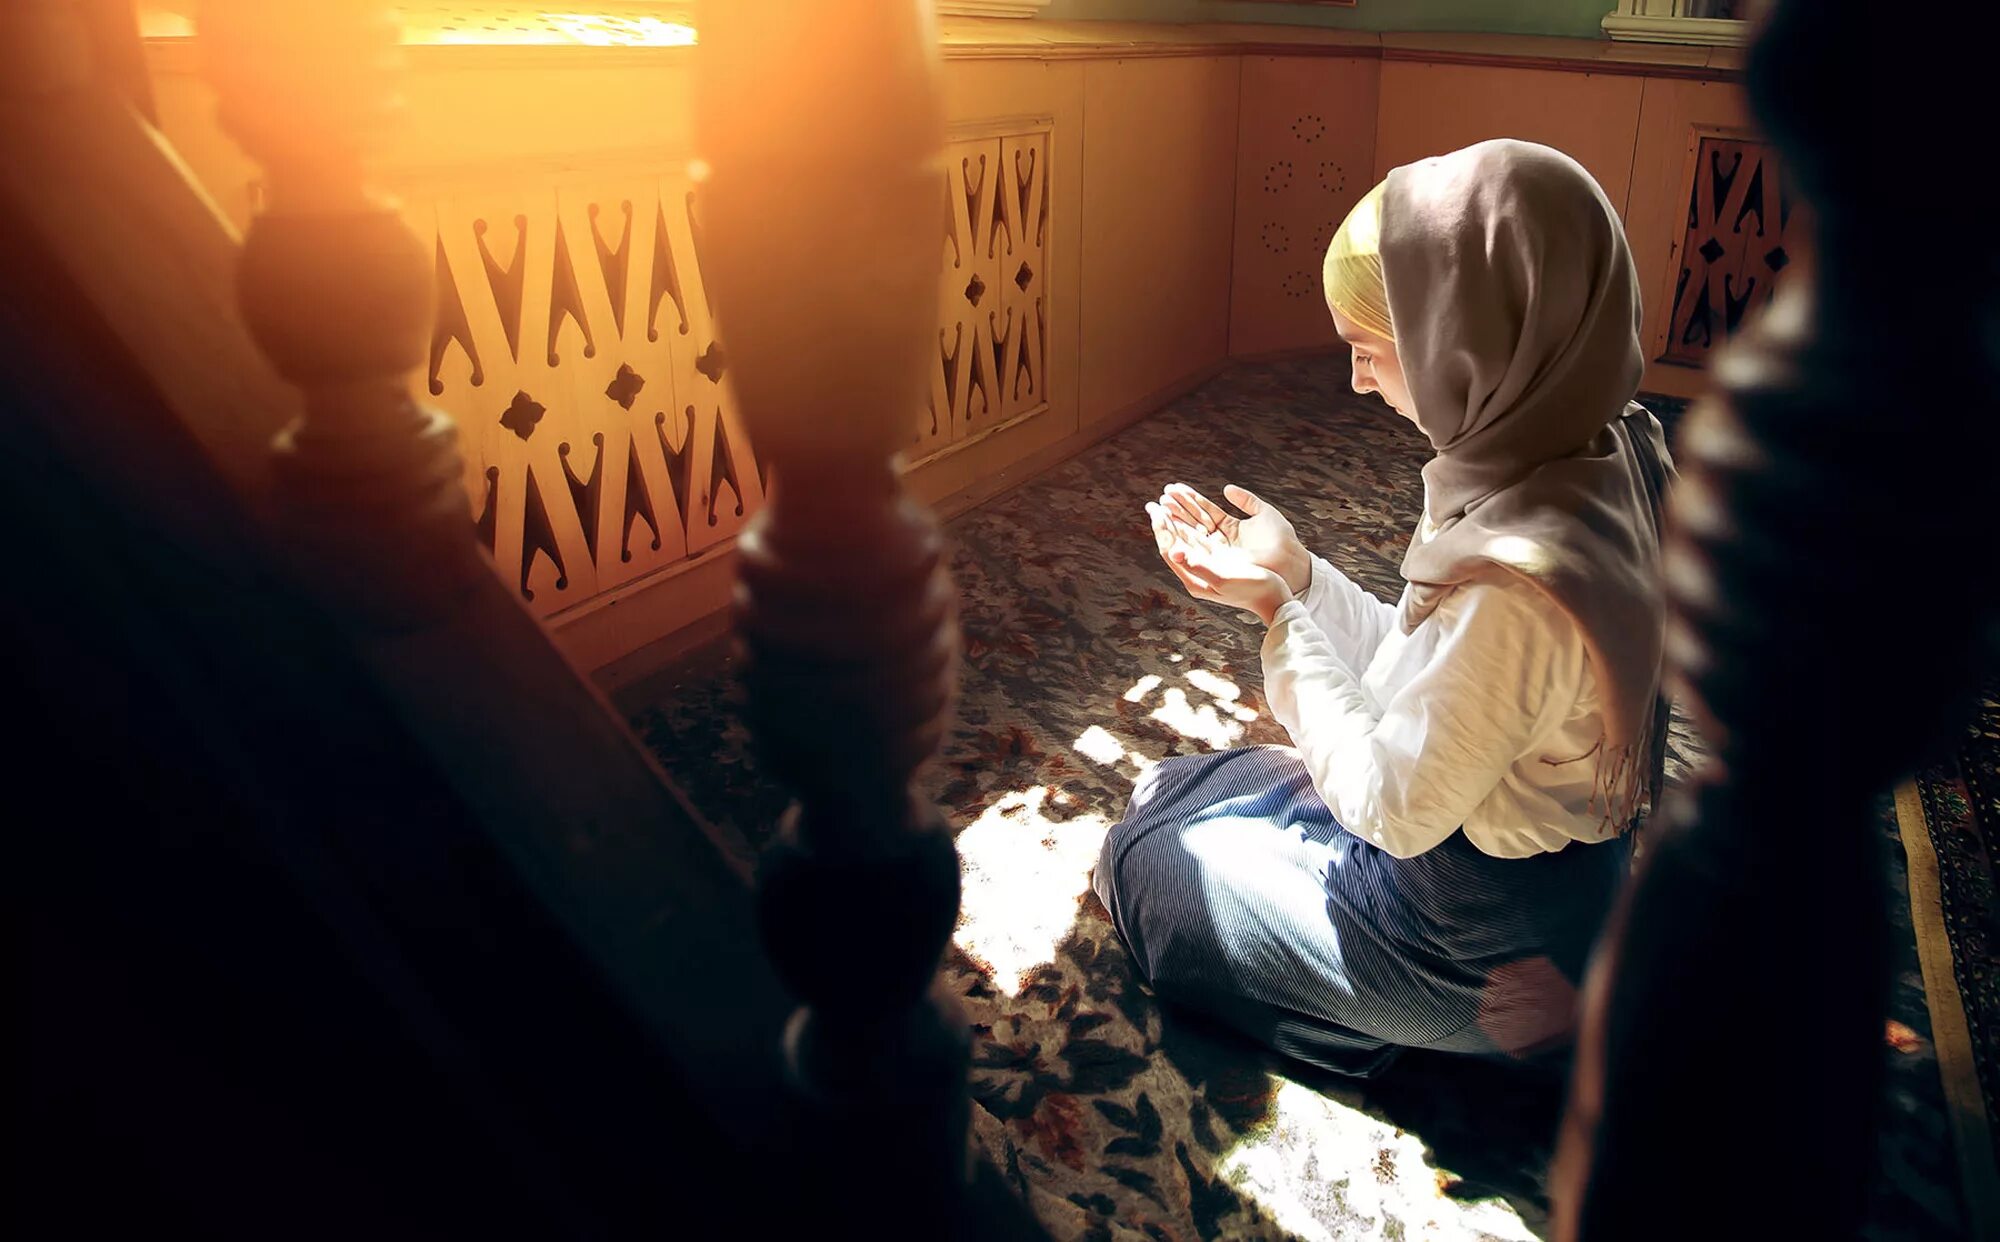 Молитва мусульманских женщин. Мусульманин молится. Мусульманка молится в мечети. Женщины в мечети. Женщины молятся в мечети.